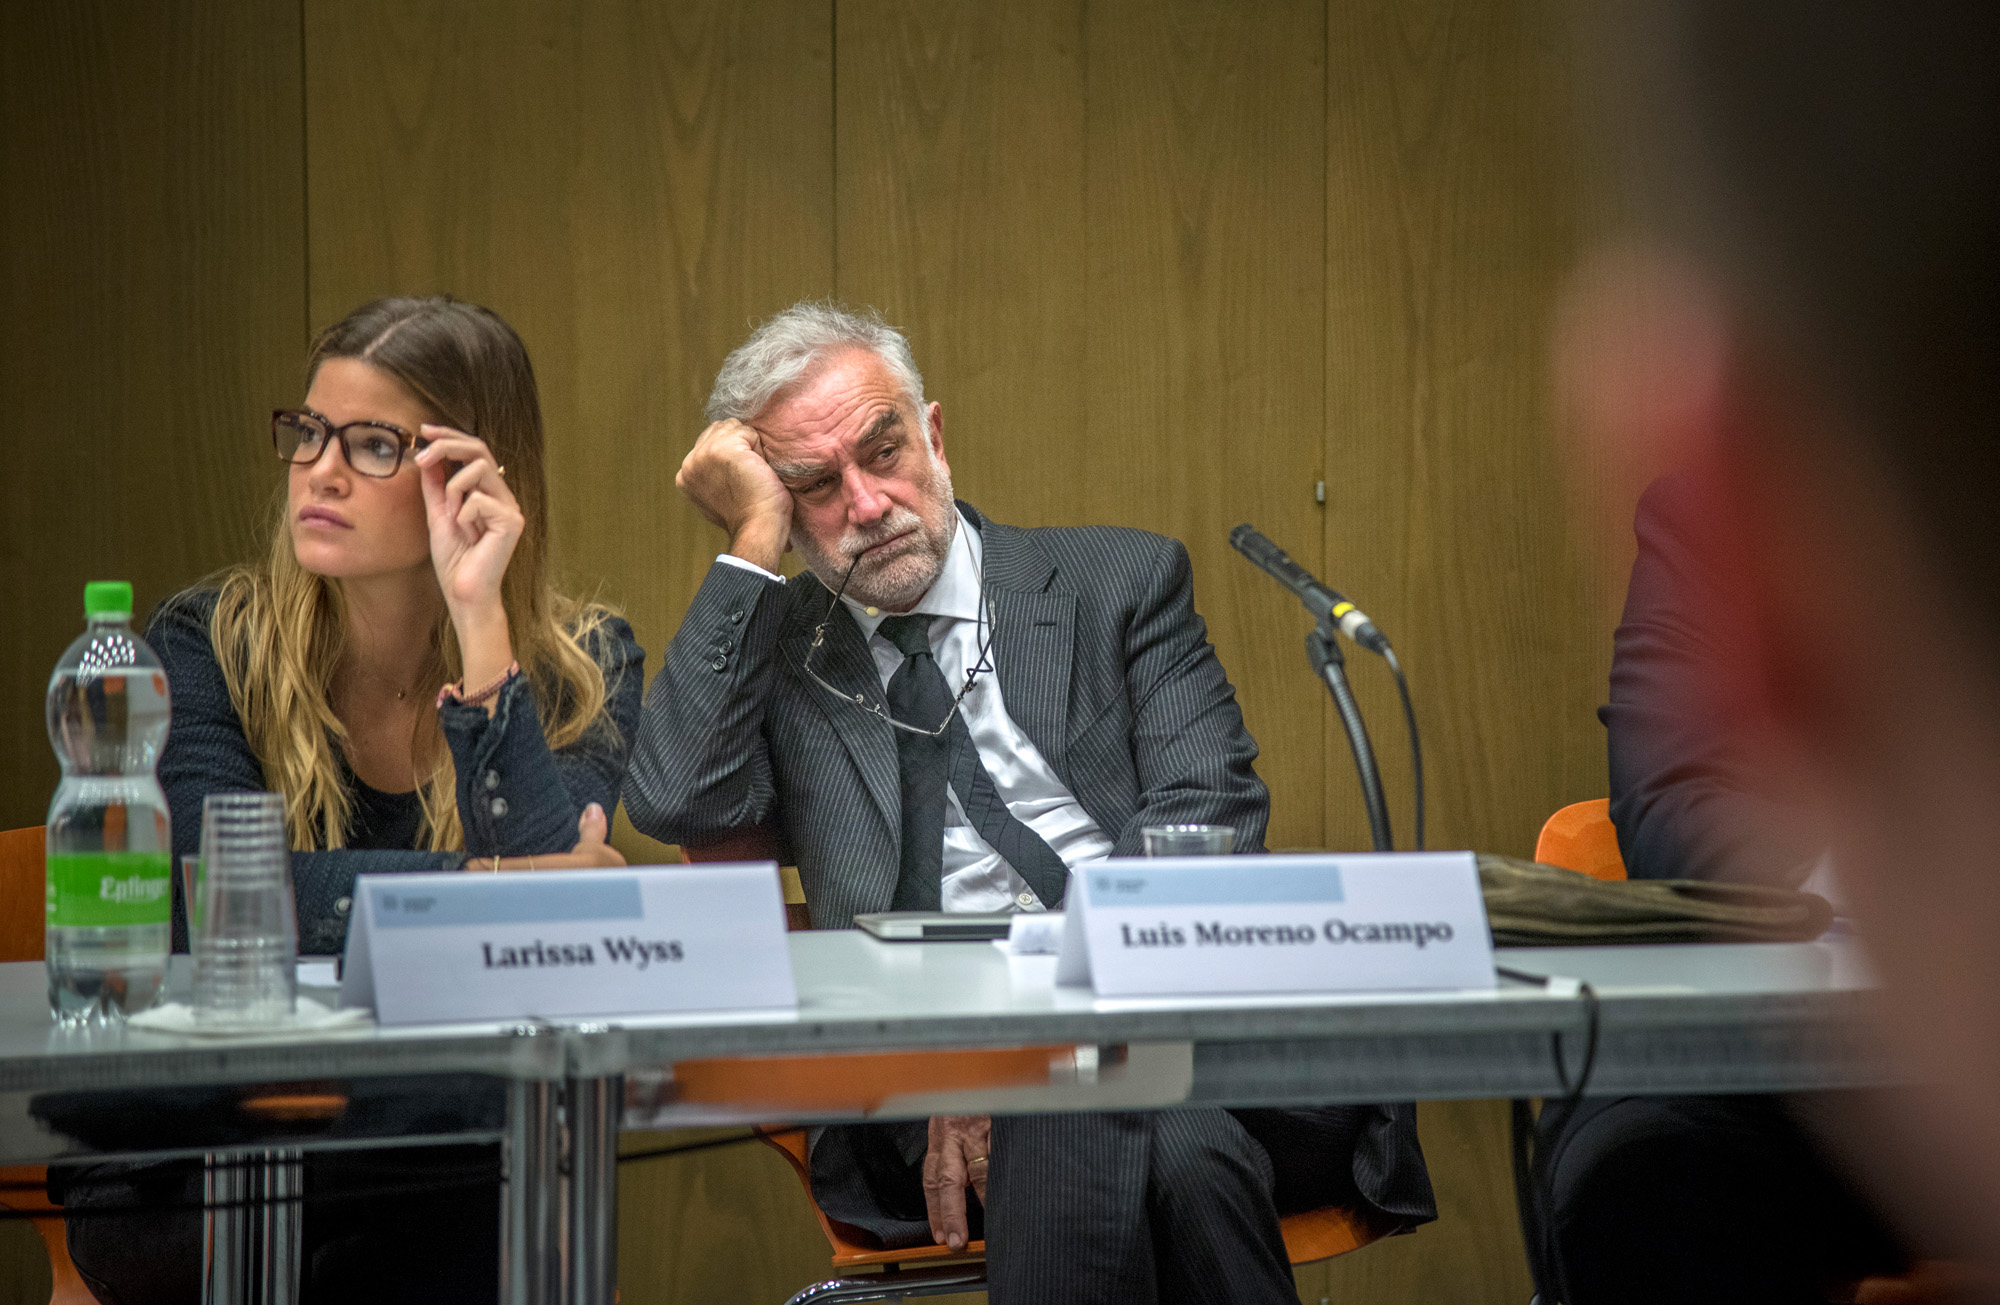 Podiumsdiskussion Universität Basel, 15. April 2016, mit Joseph Blatter, im Bild: Luis Moreano Ocampo